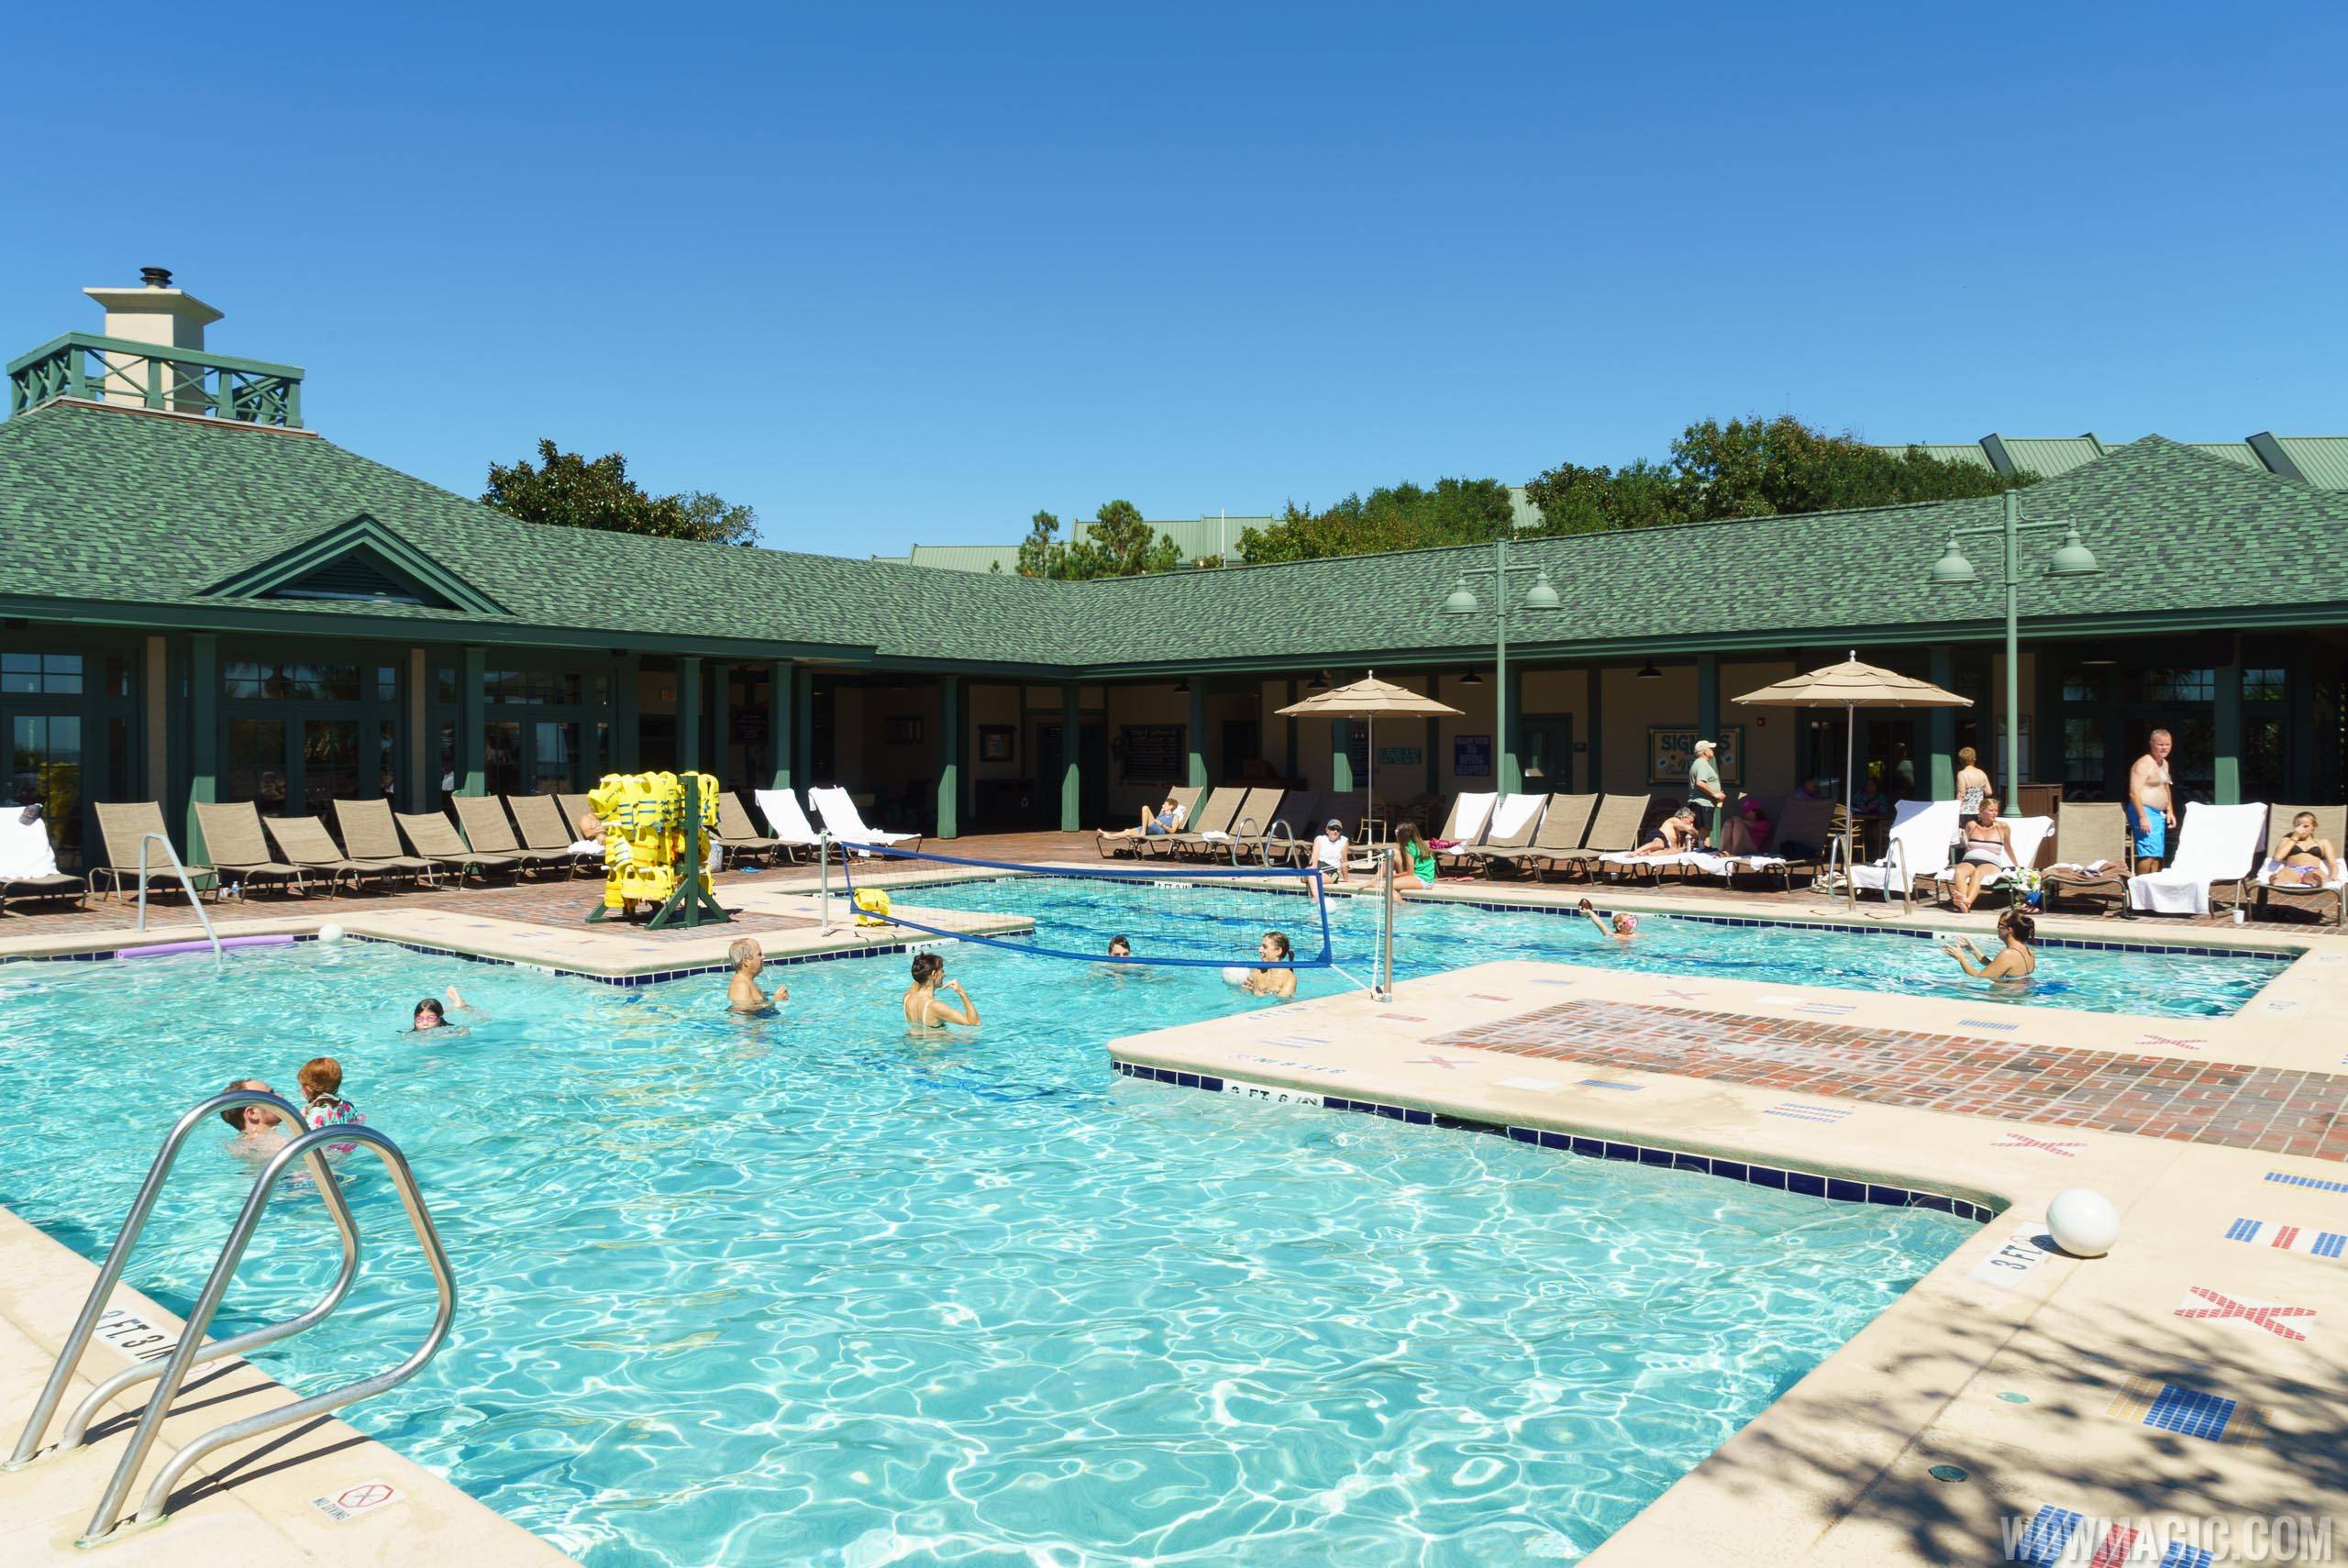 Disney's Hilton Head Island Resort - Beach House pool